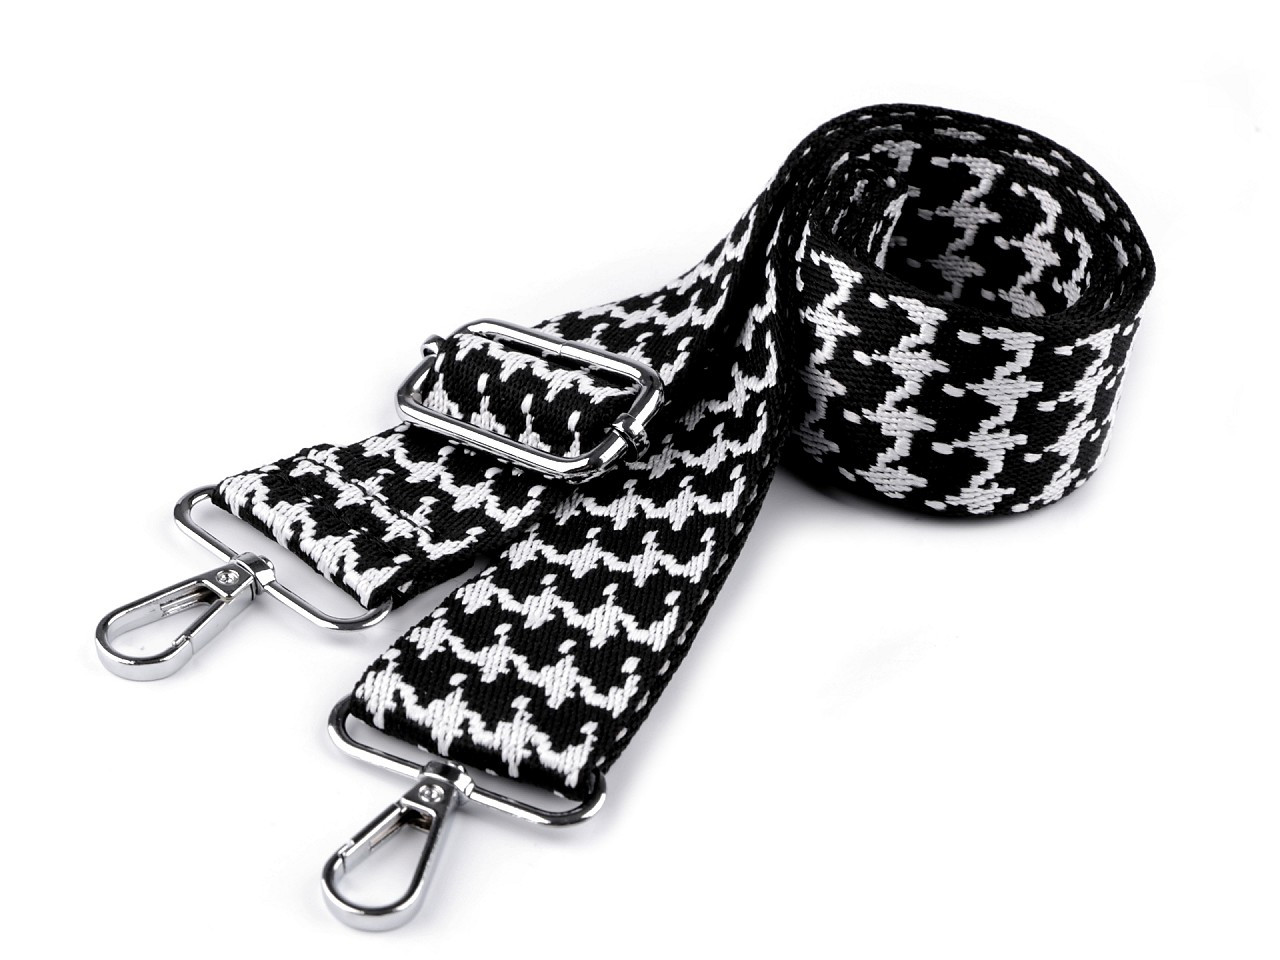 Textilní ucho / popruh na tašku s karabinami šíře 3,8 cm, barva 4 černá bílá